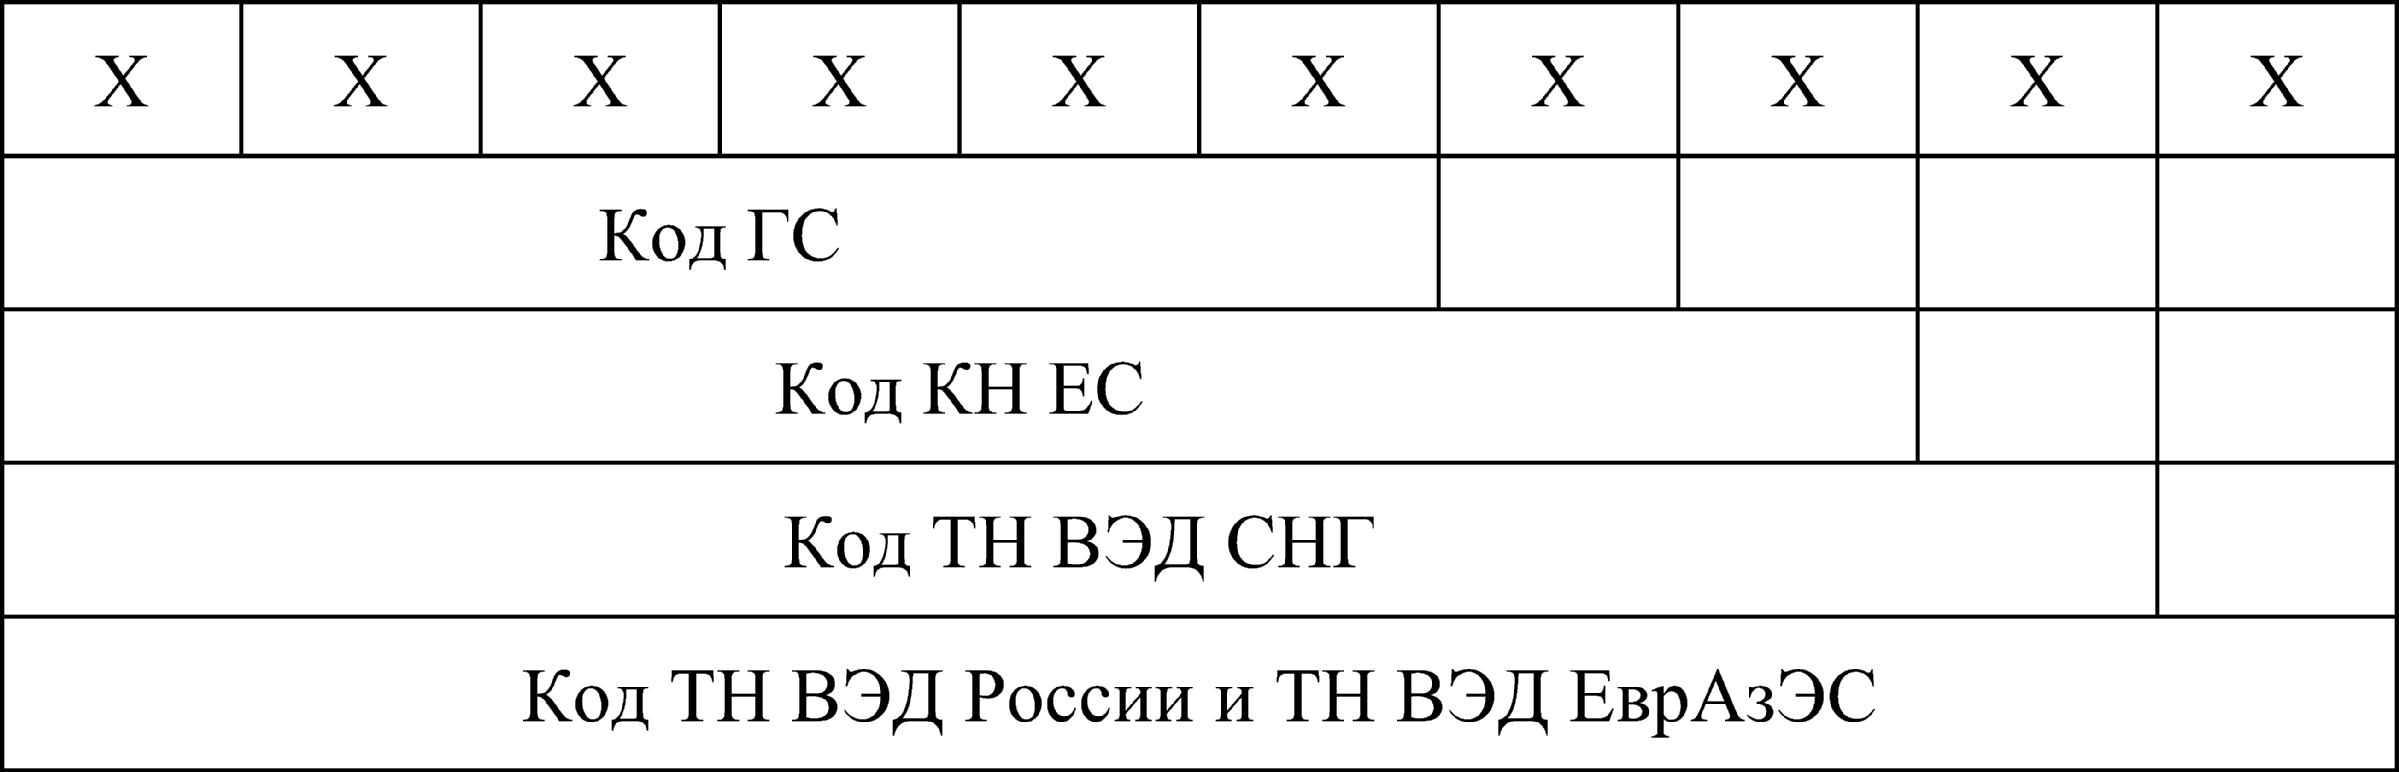 Таможенные коды тн вэд россии. Структура кода тн ВЭД ЕАЭС. Структура десятизначного кода тн ВЭД. Классификационная структура тн ВЭД ЕАЭС. Строение кода тн ВЭД.